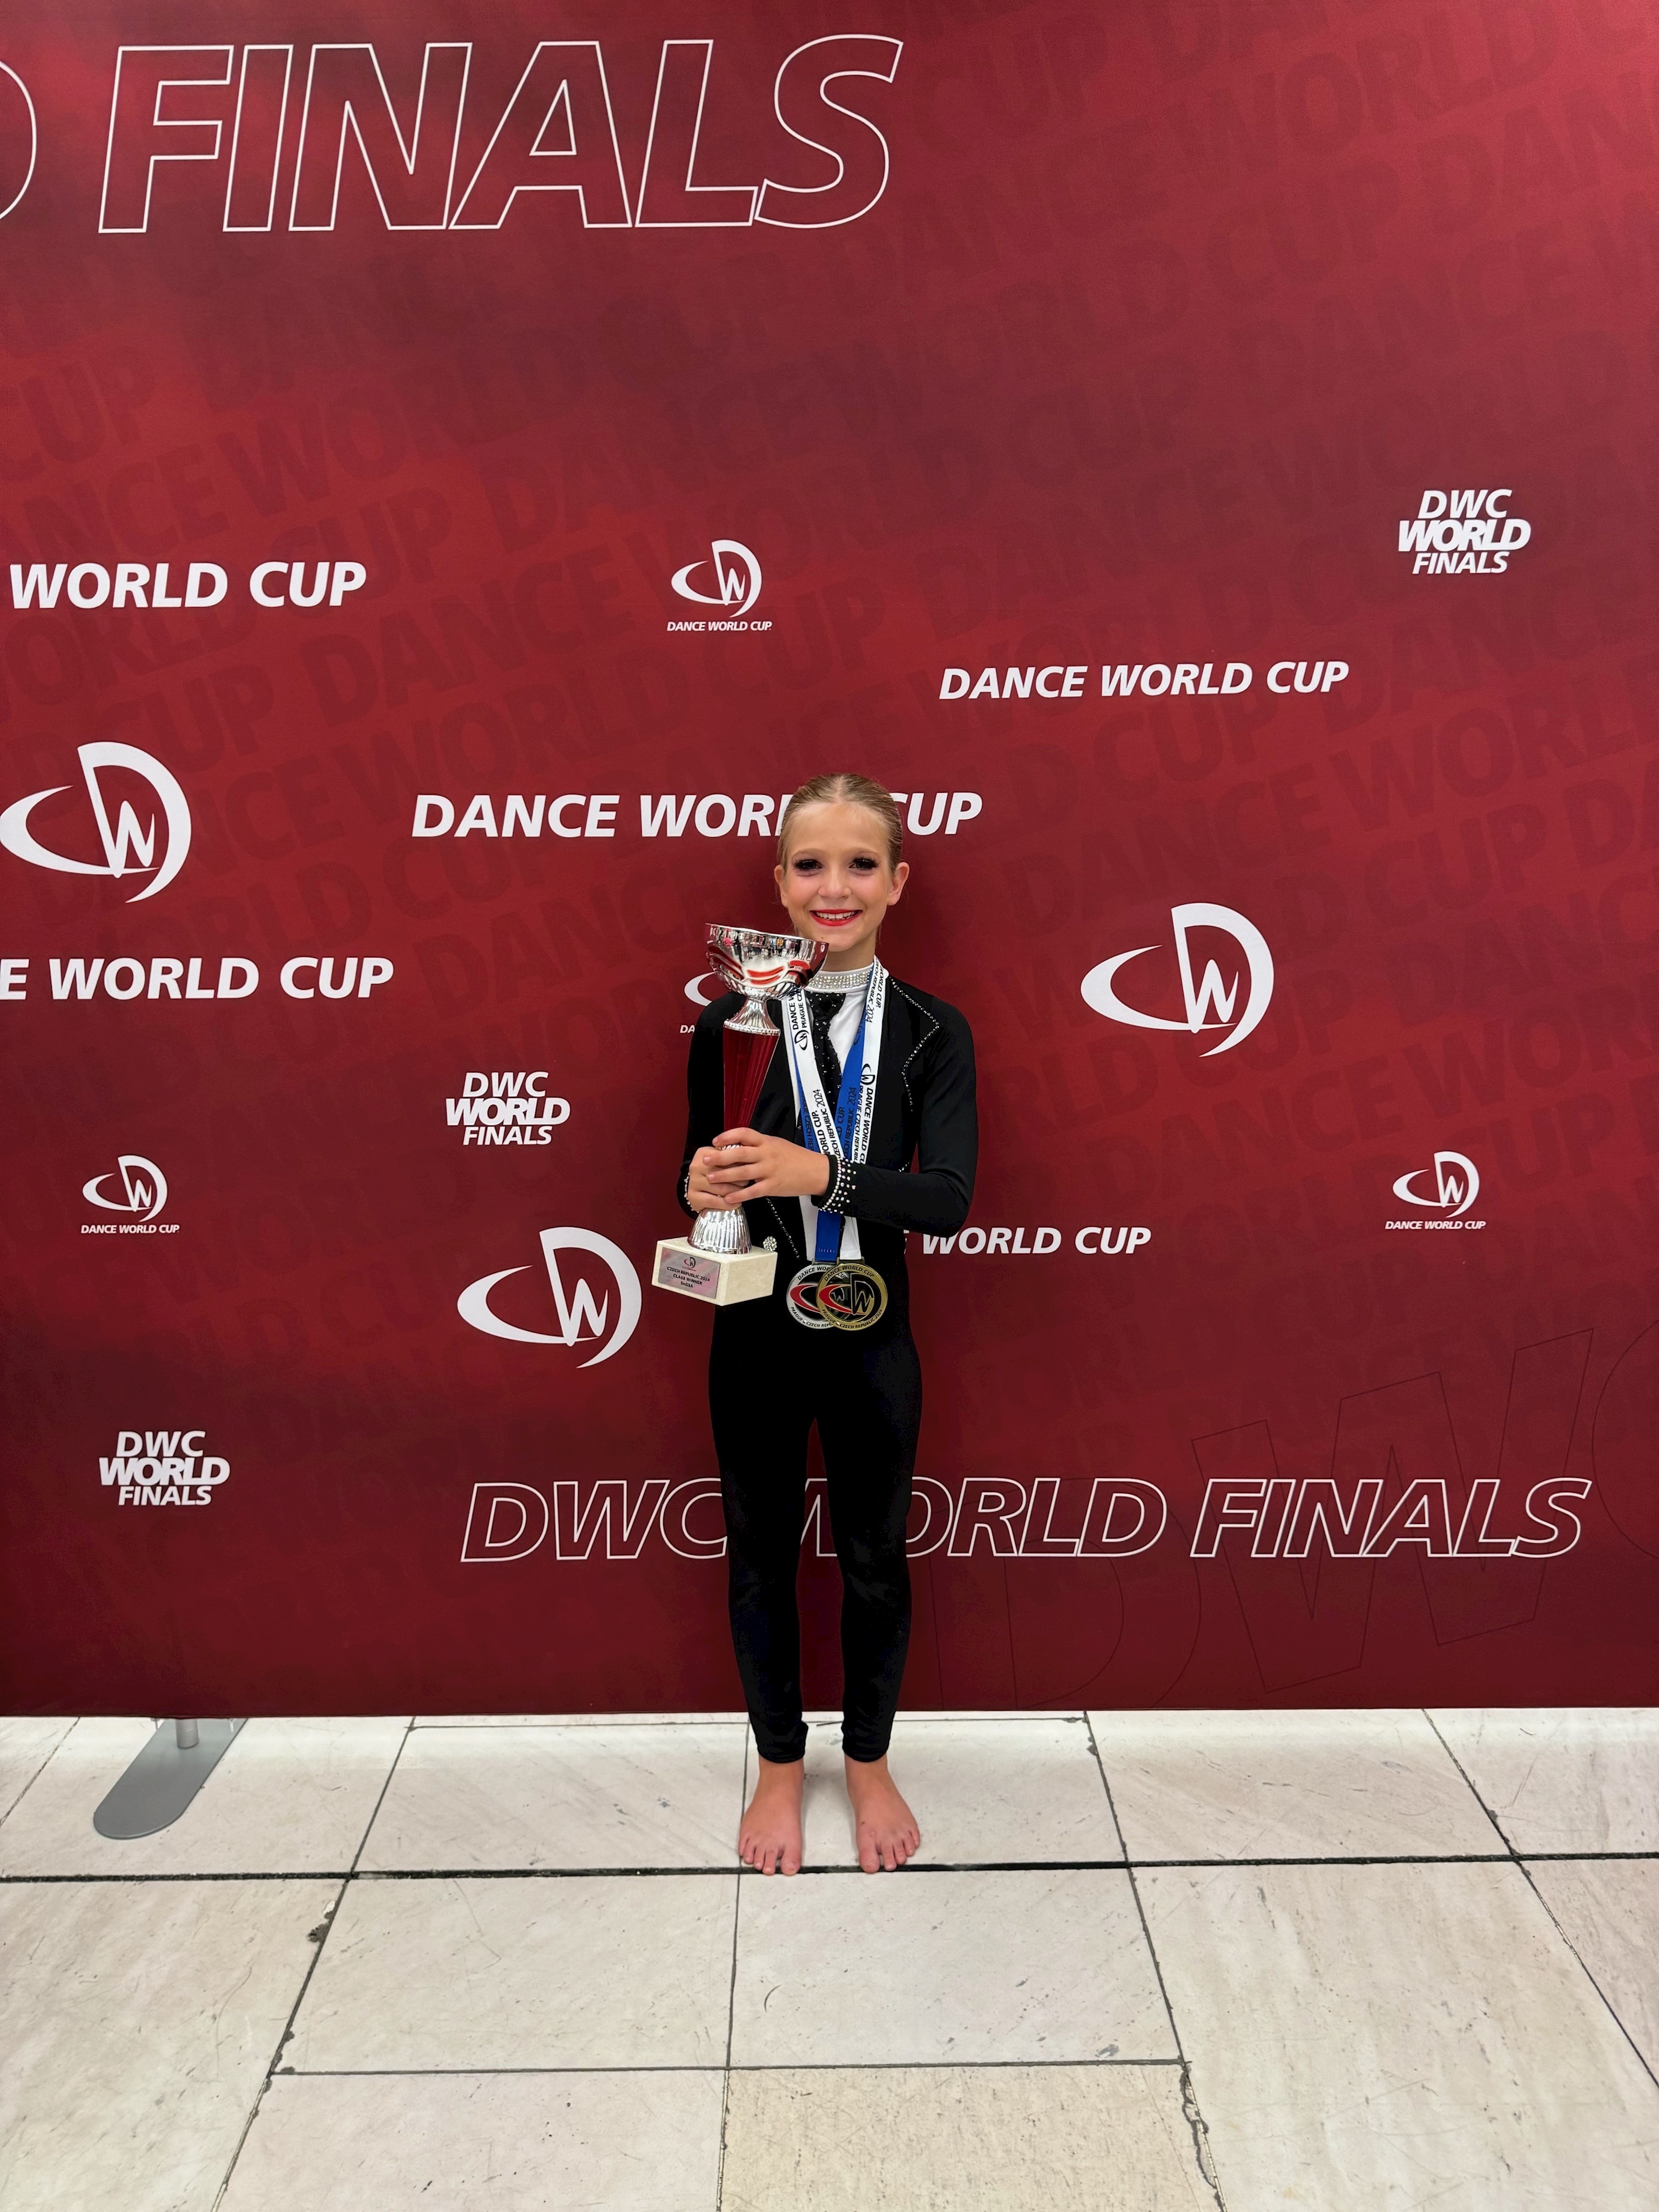 Tomasina is a Dance World Champion